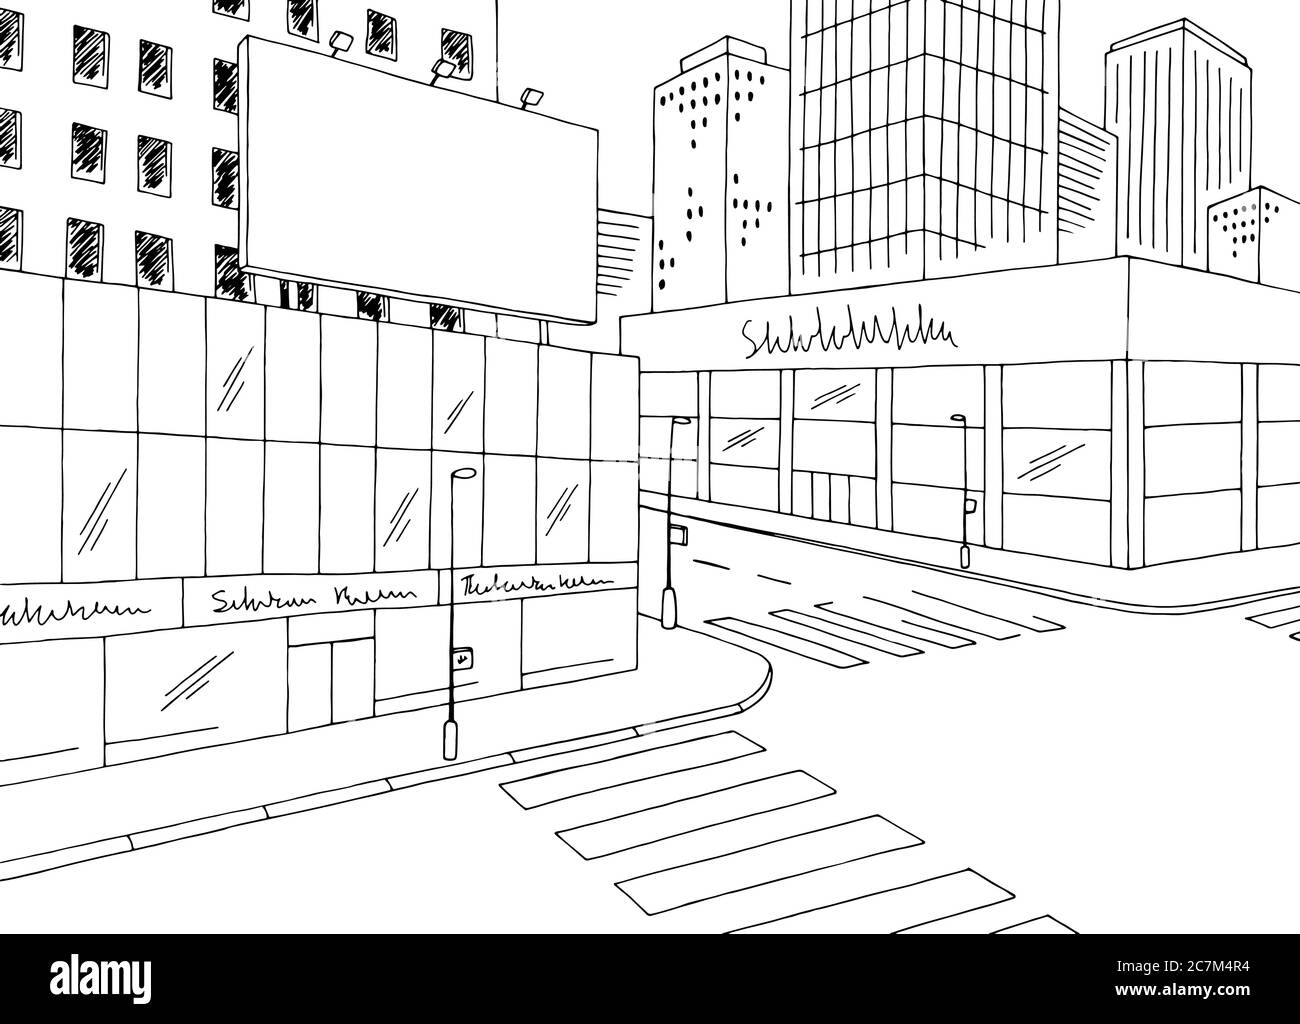 Straße Billboard Grafik schwarz weiß Stadt Landschaft Skizze Illustration Vektor Stock Vektor